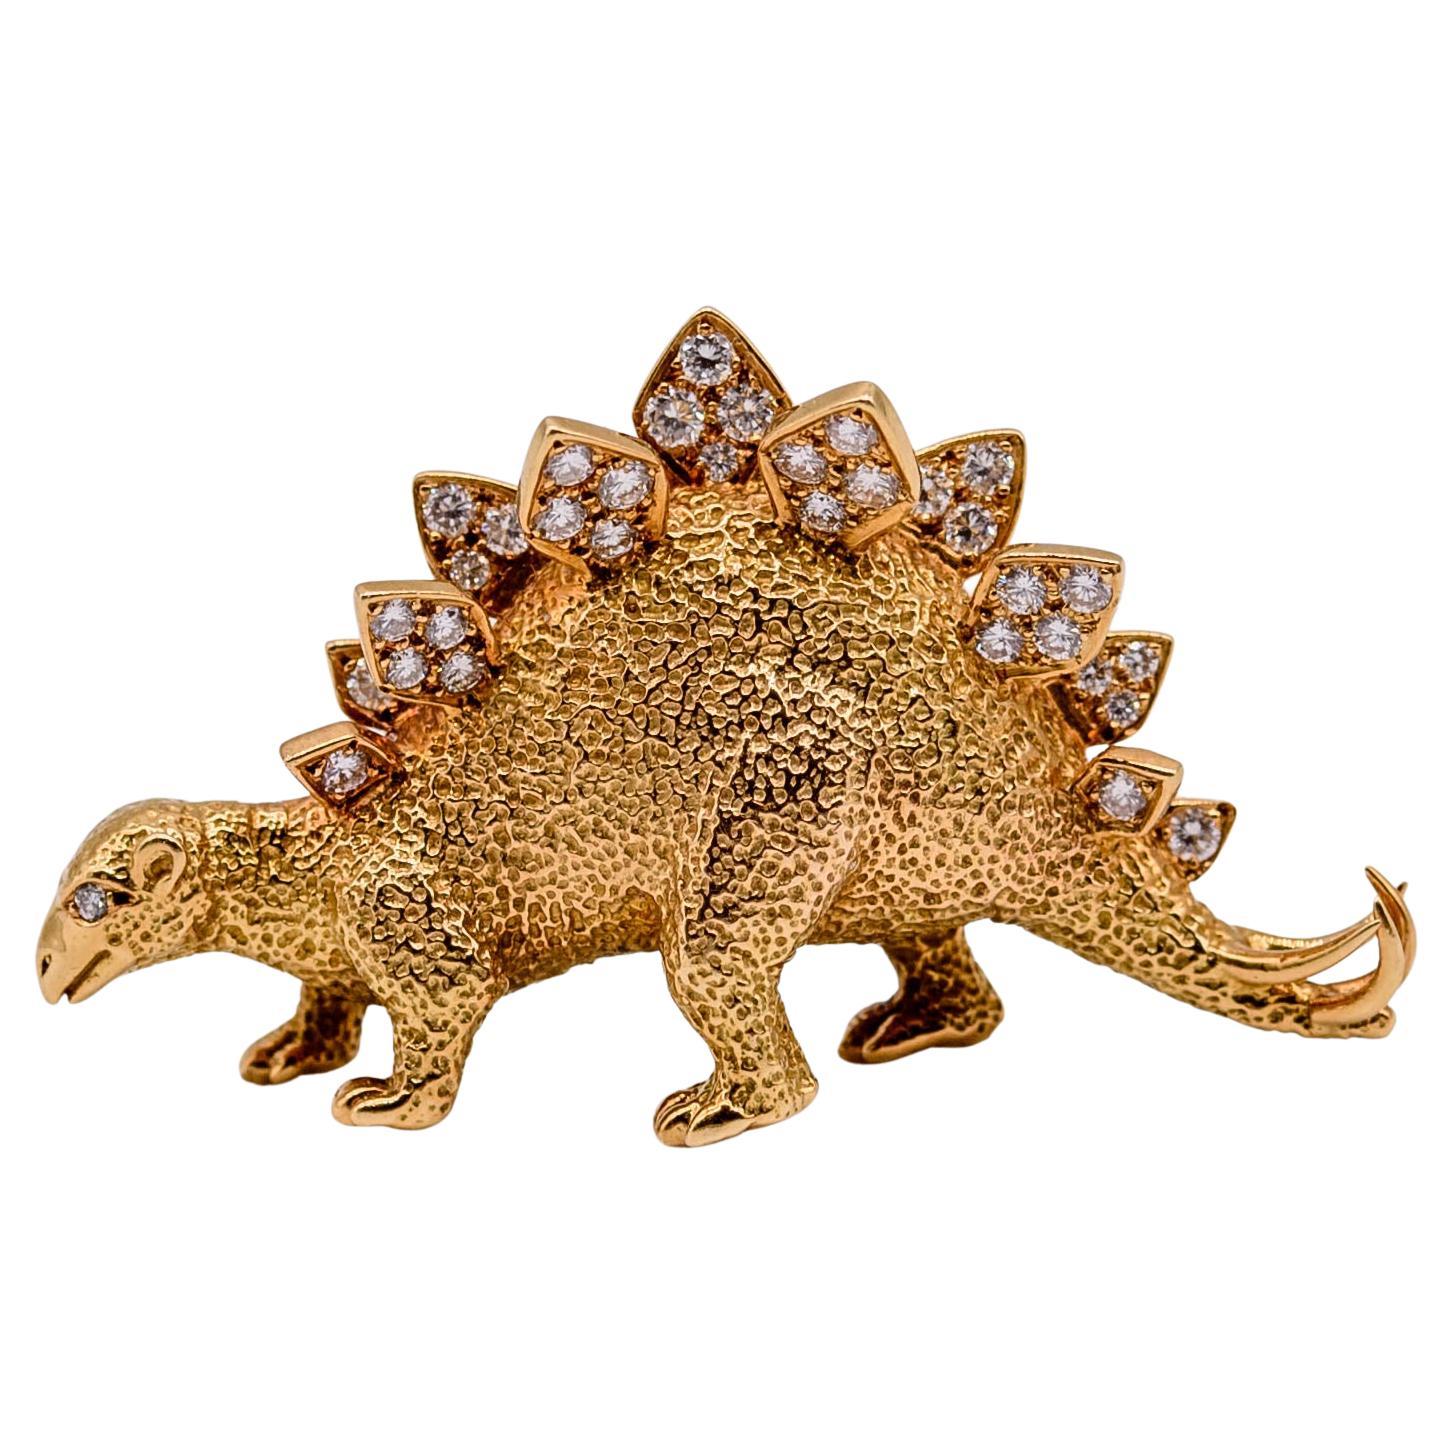 Unusual 18 Karat Gold Diamond Stegosaurus Dinosaur Pin For Sale